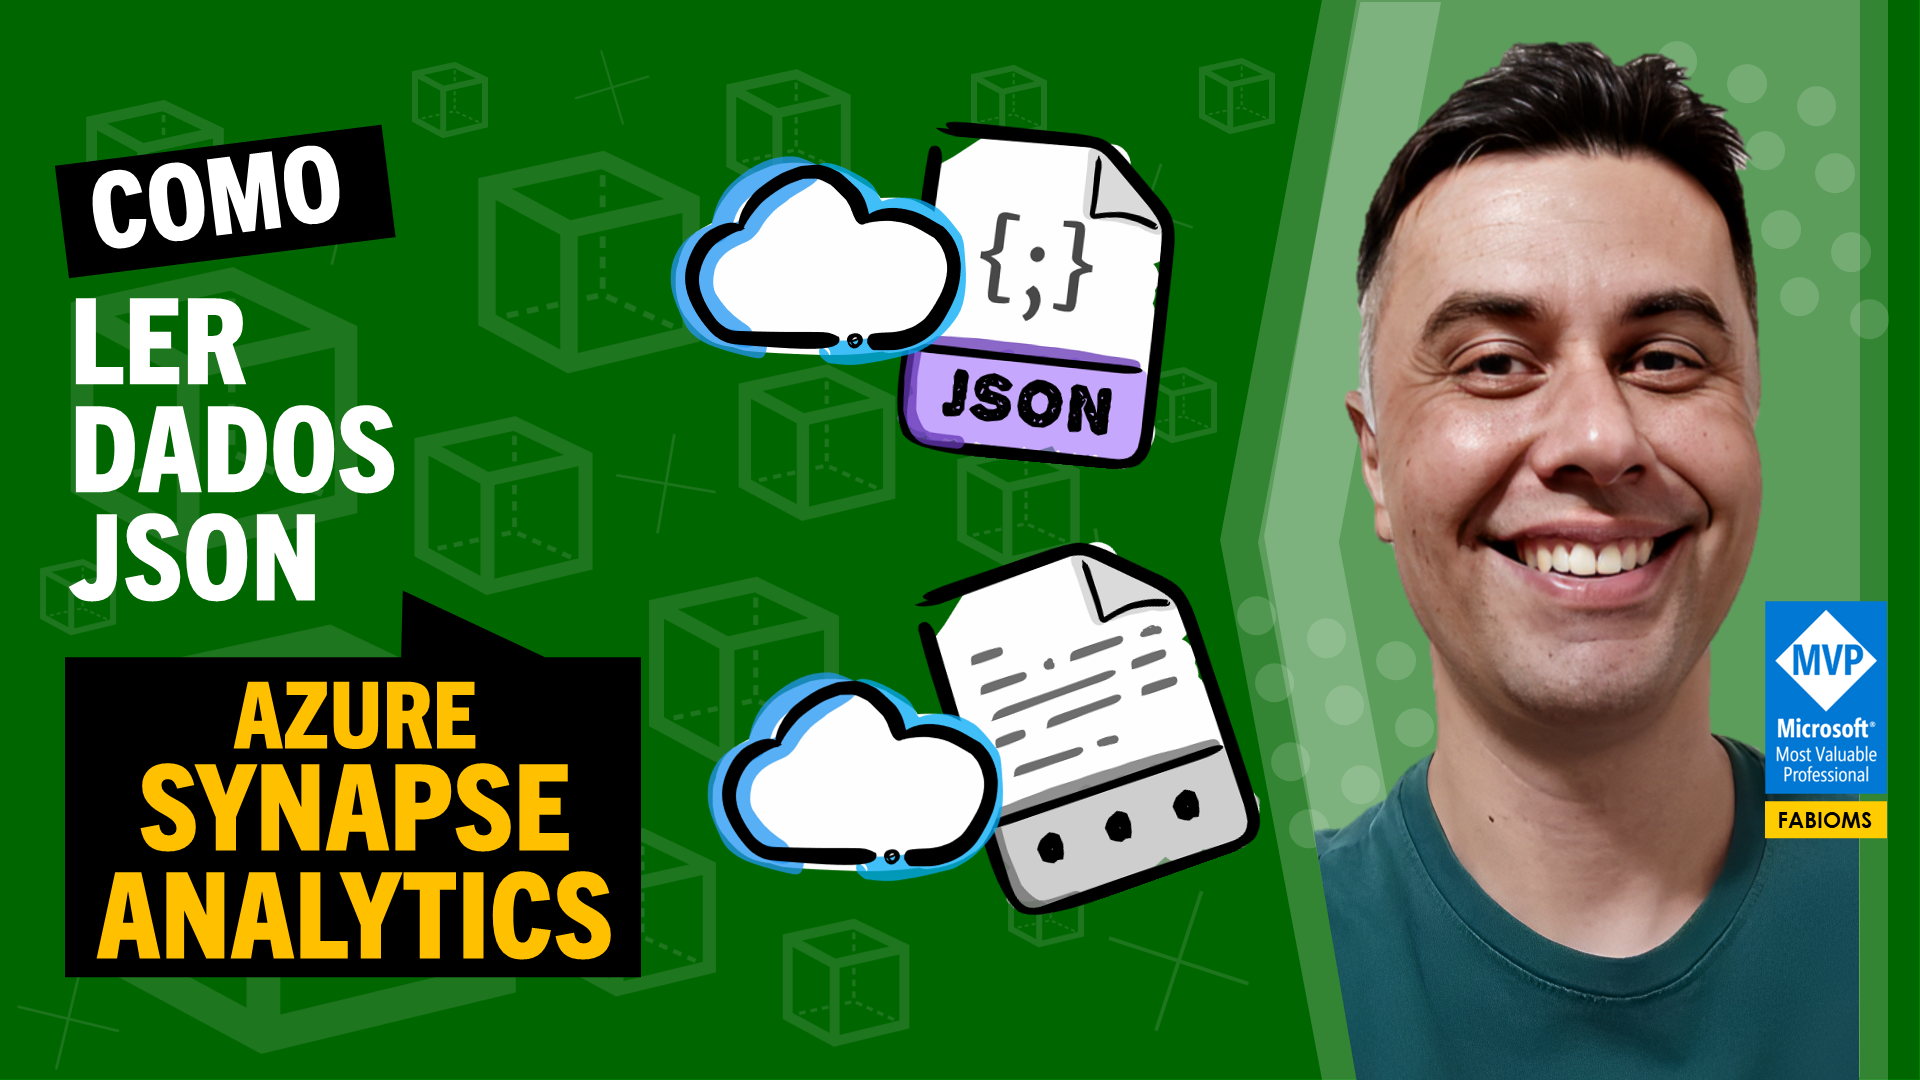 Como ler dados no formato JSON no Azure Synapse Analytics